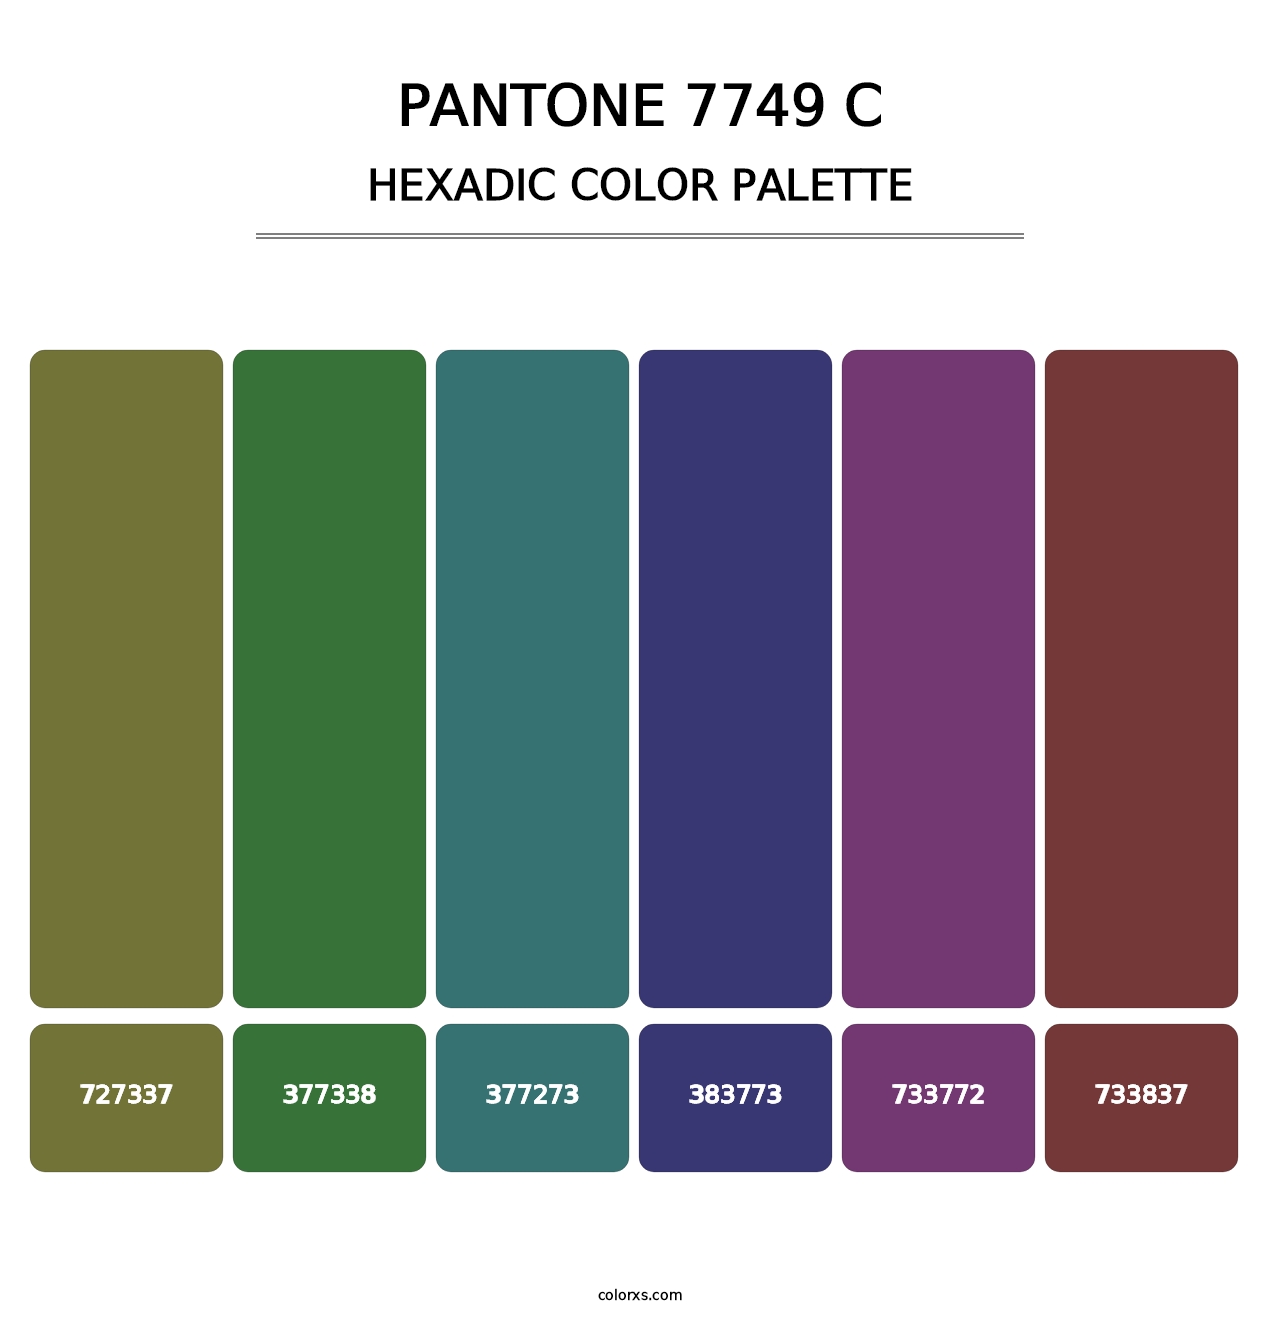 PANTONE 7749 C - Hexadic Color Palette